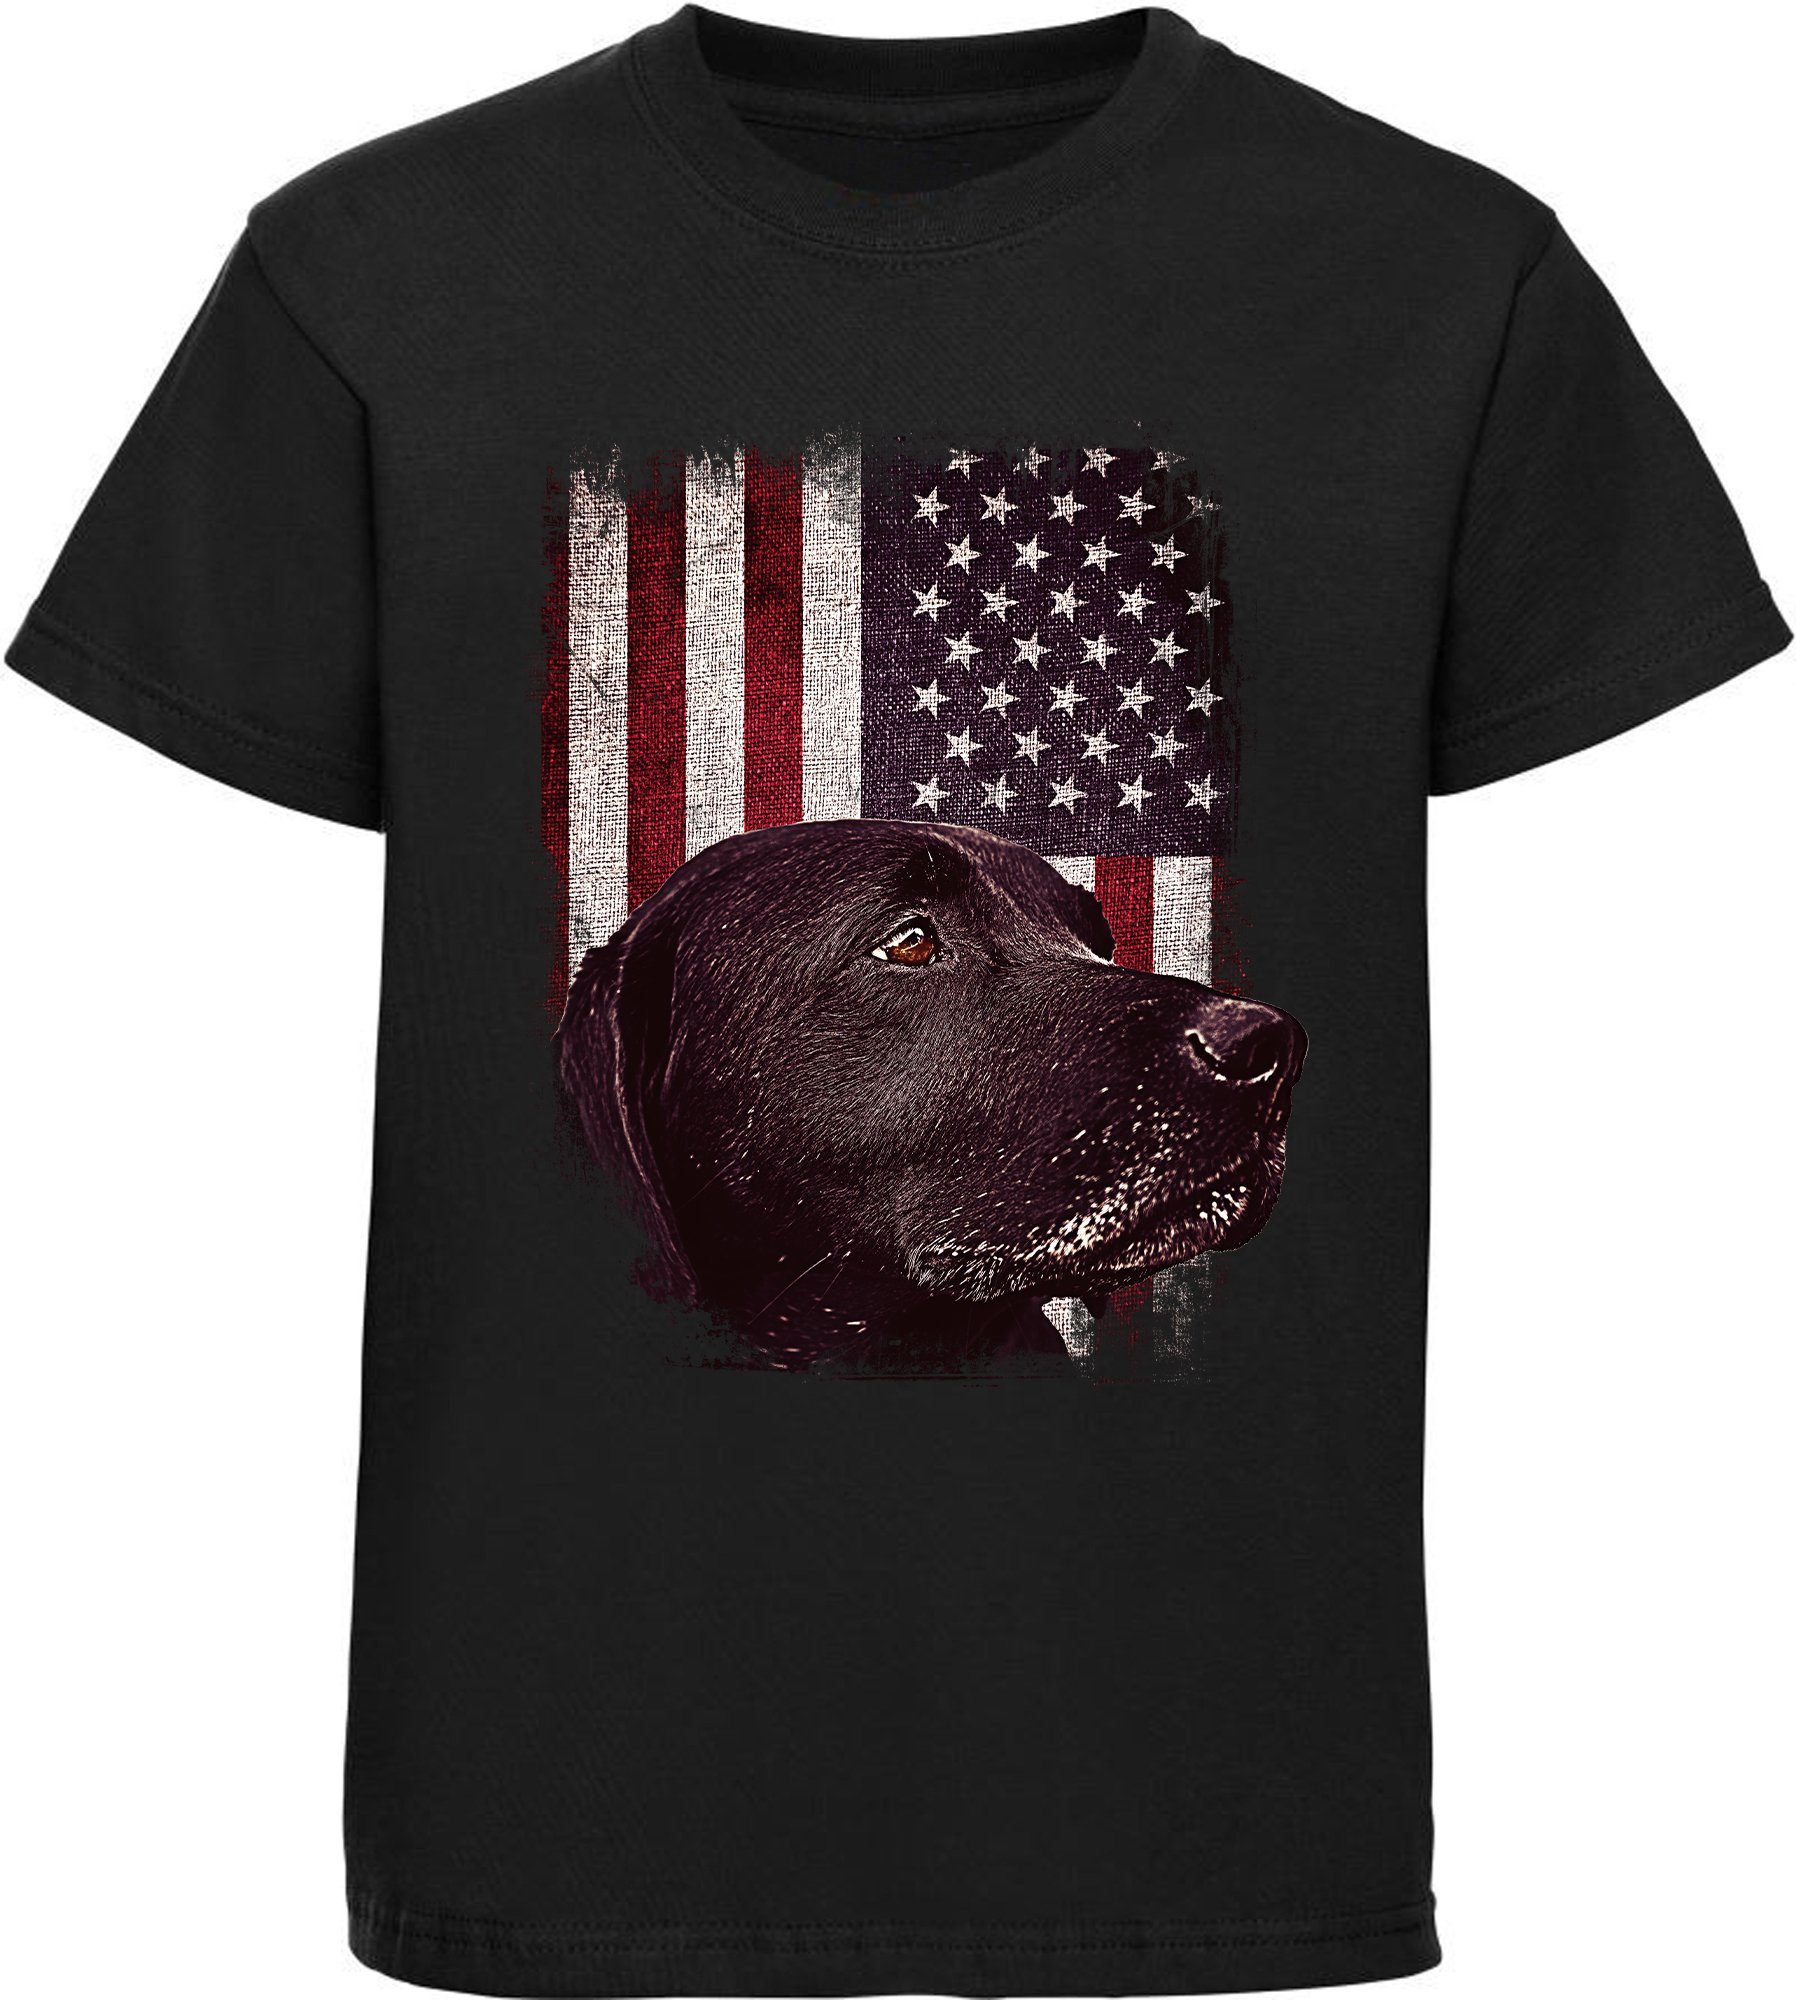 MyDesign24 T-Shirt Kinder Hunde Print Shirt bedruckt - schwarzer Labrador vor USA Flagge Baumwollshirt mit Aufdruck, i246 | T-Shirts